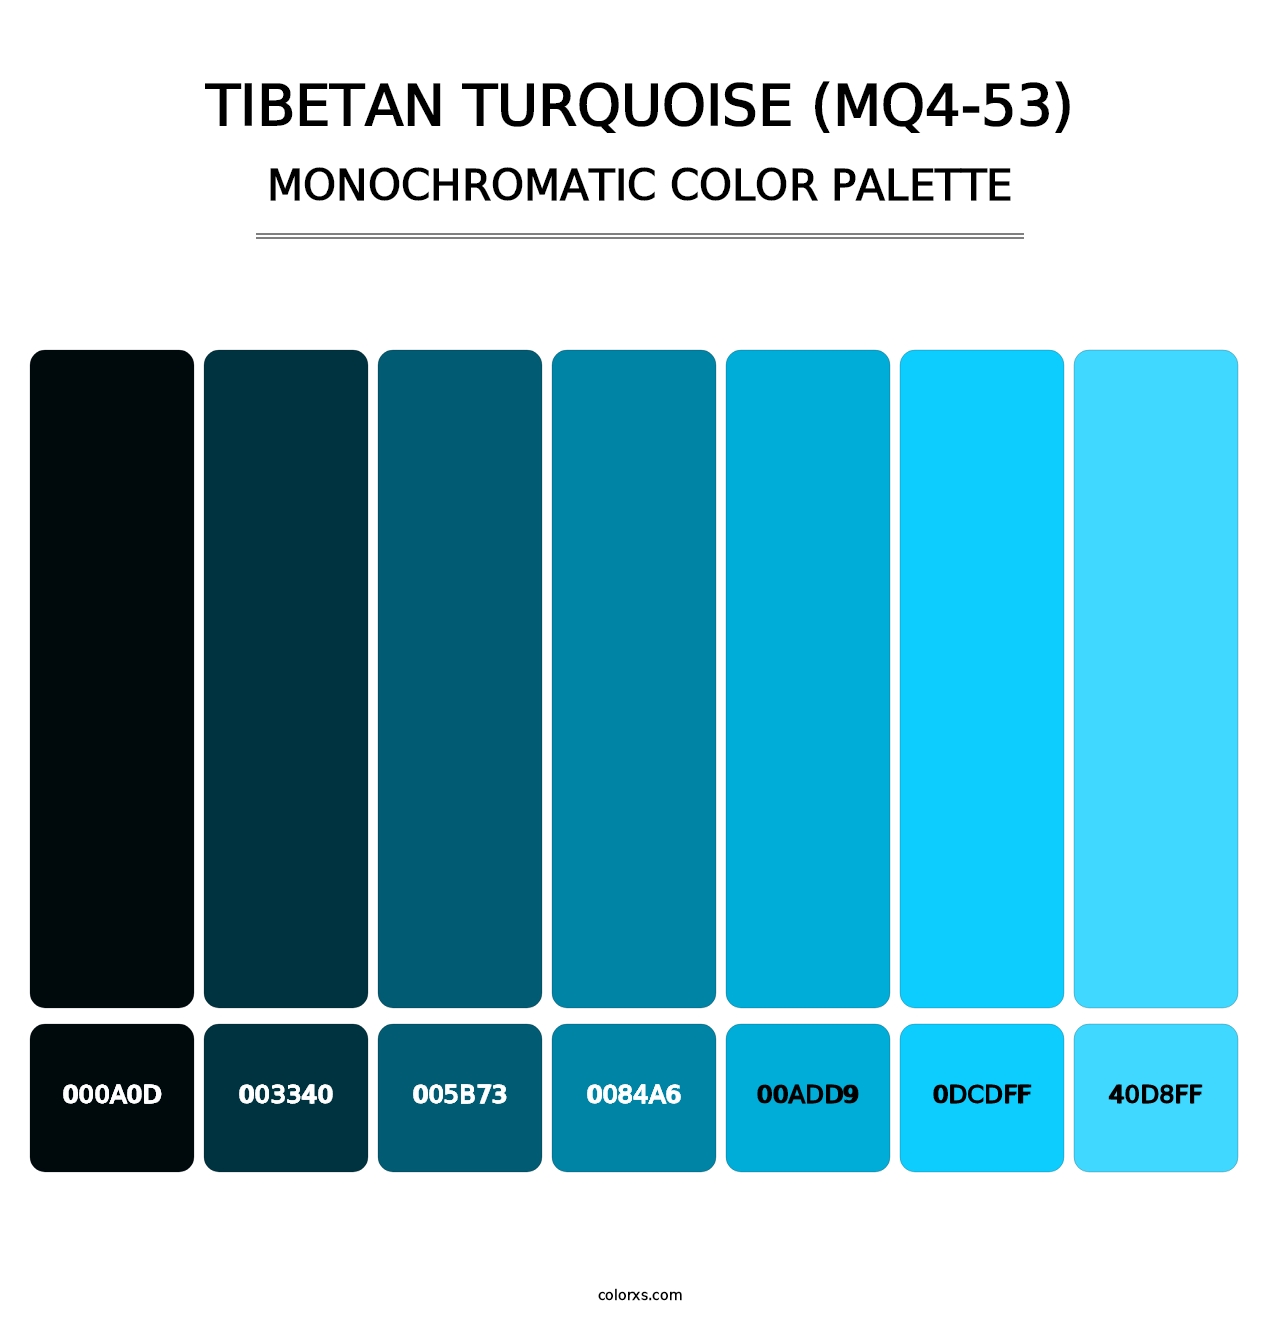 Tibetan Turquoise (MQ4-53) - Monochromatic Color Palette